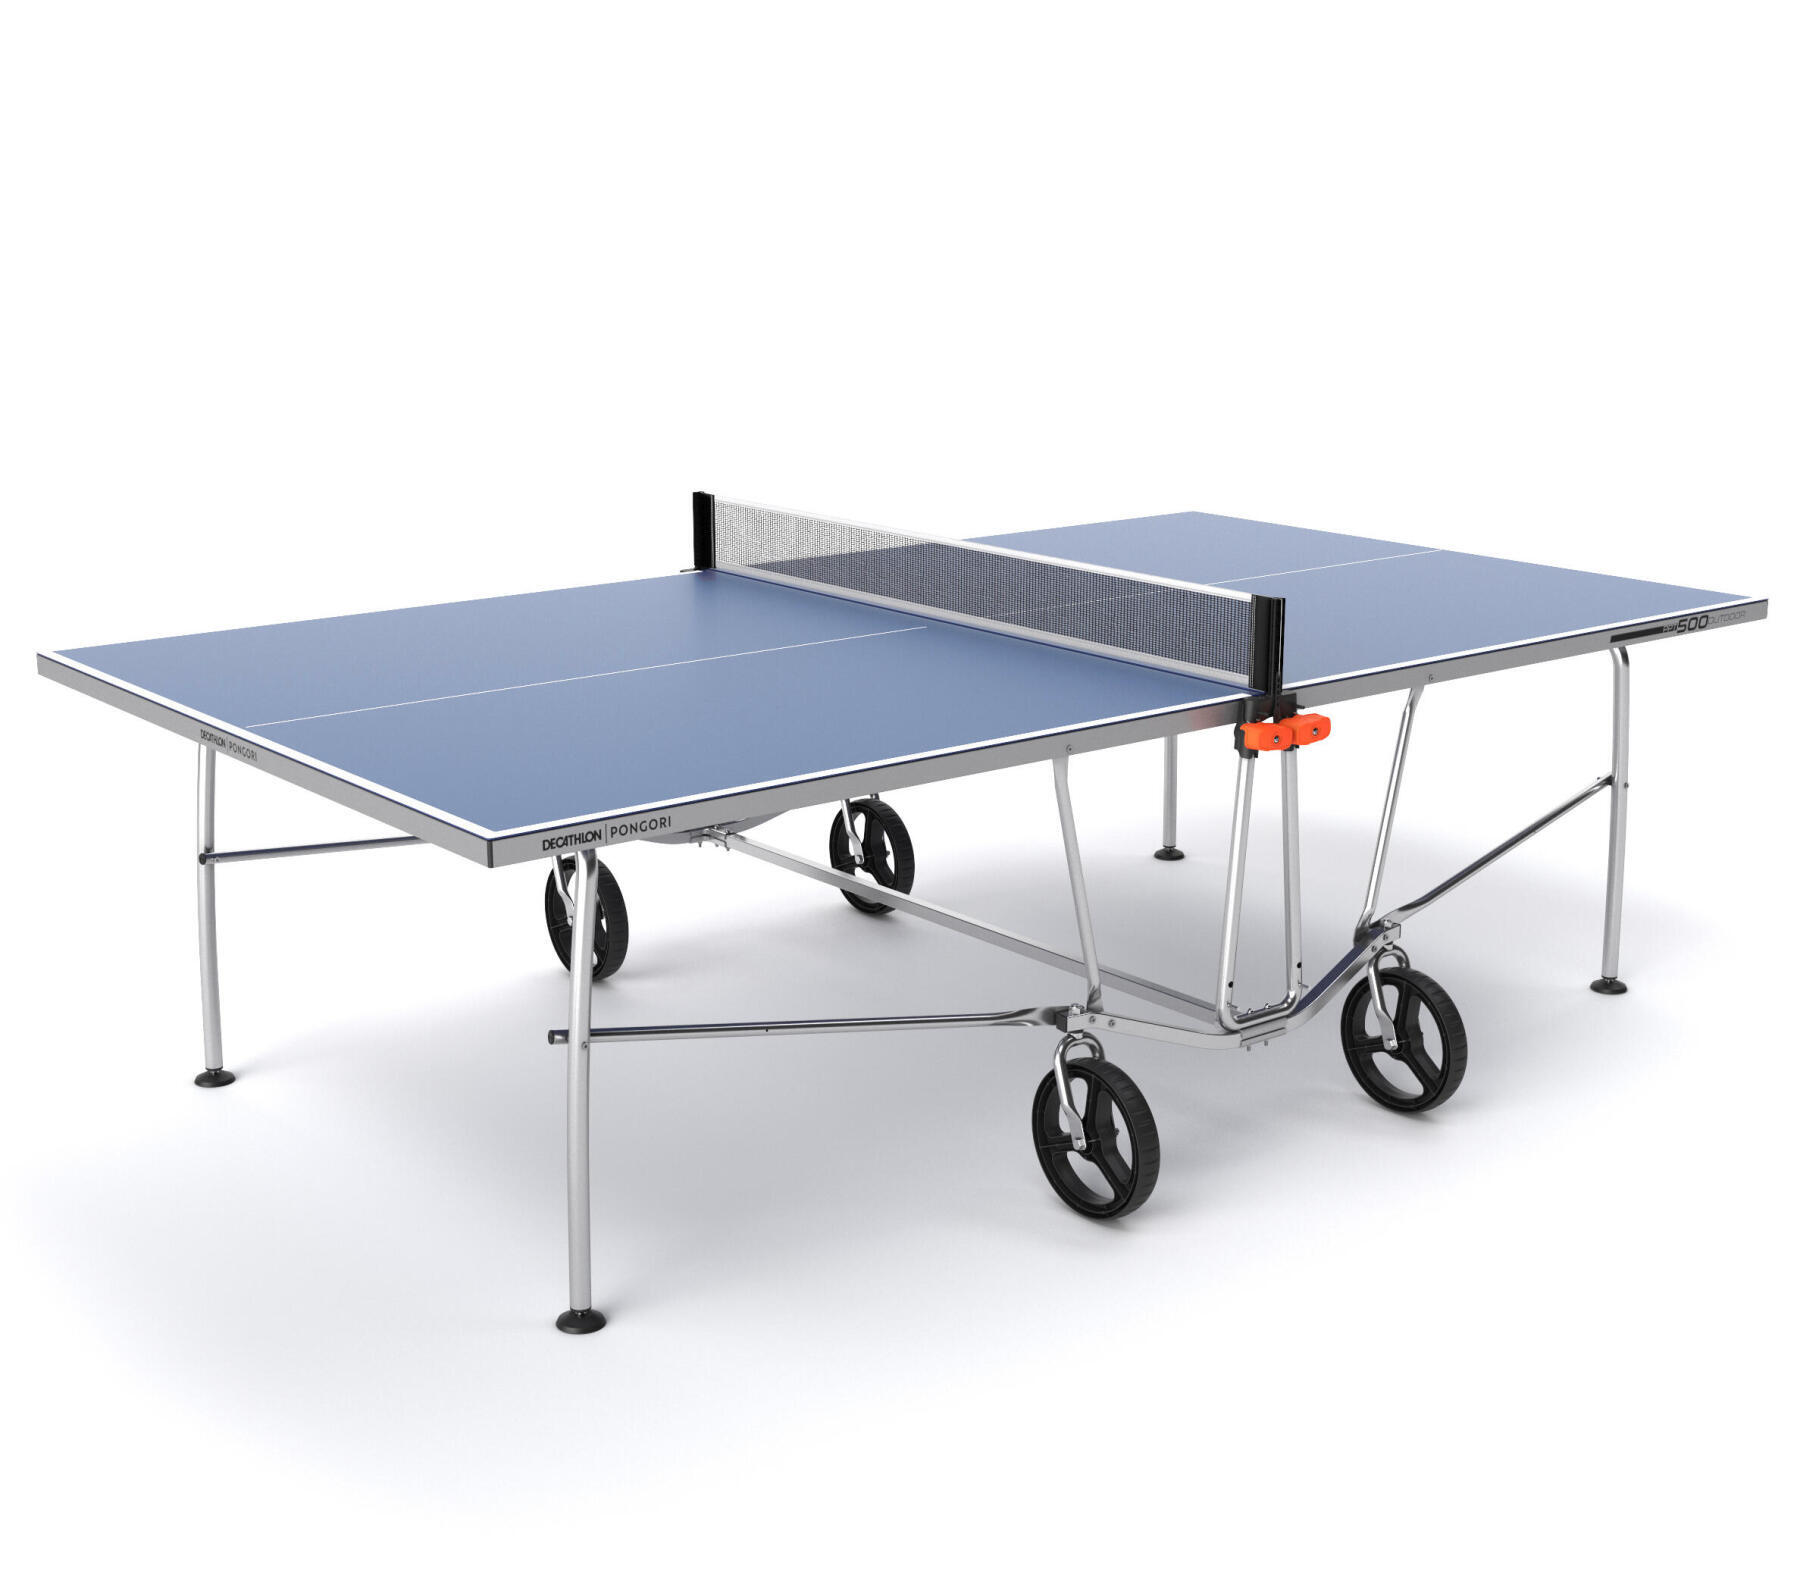 Mesa de Ping Pong - Instruções Mesa PPT 500 outdoor / FT 730 outdoor